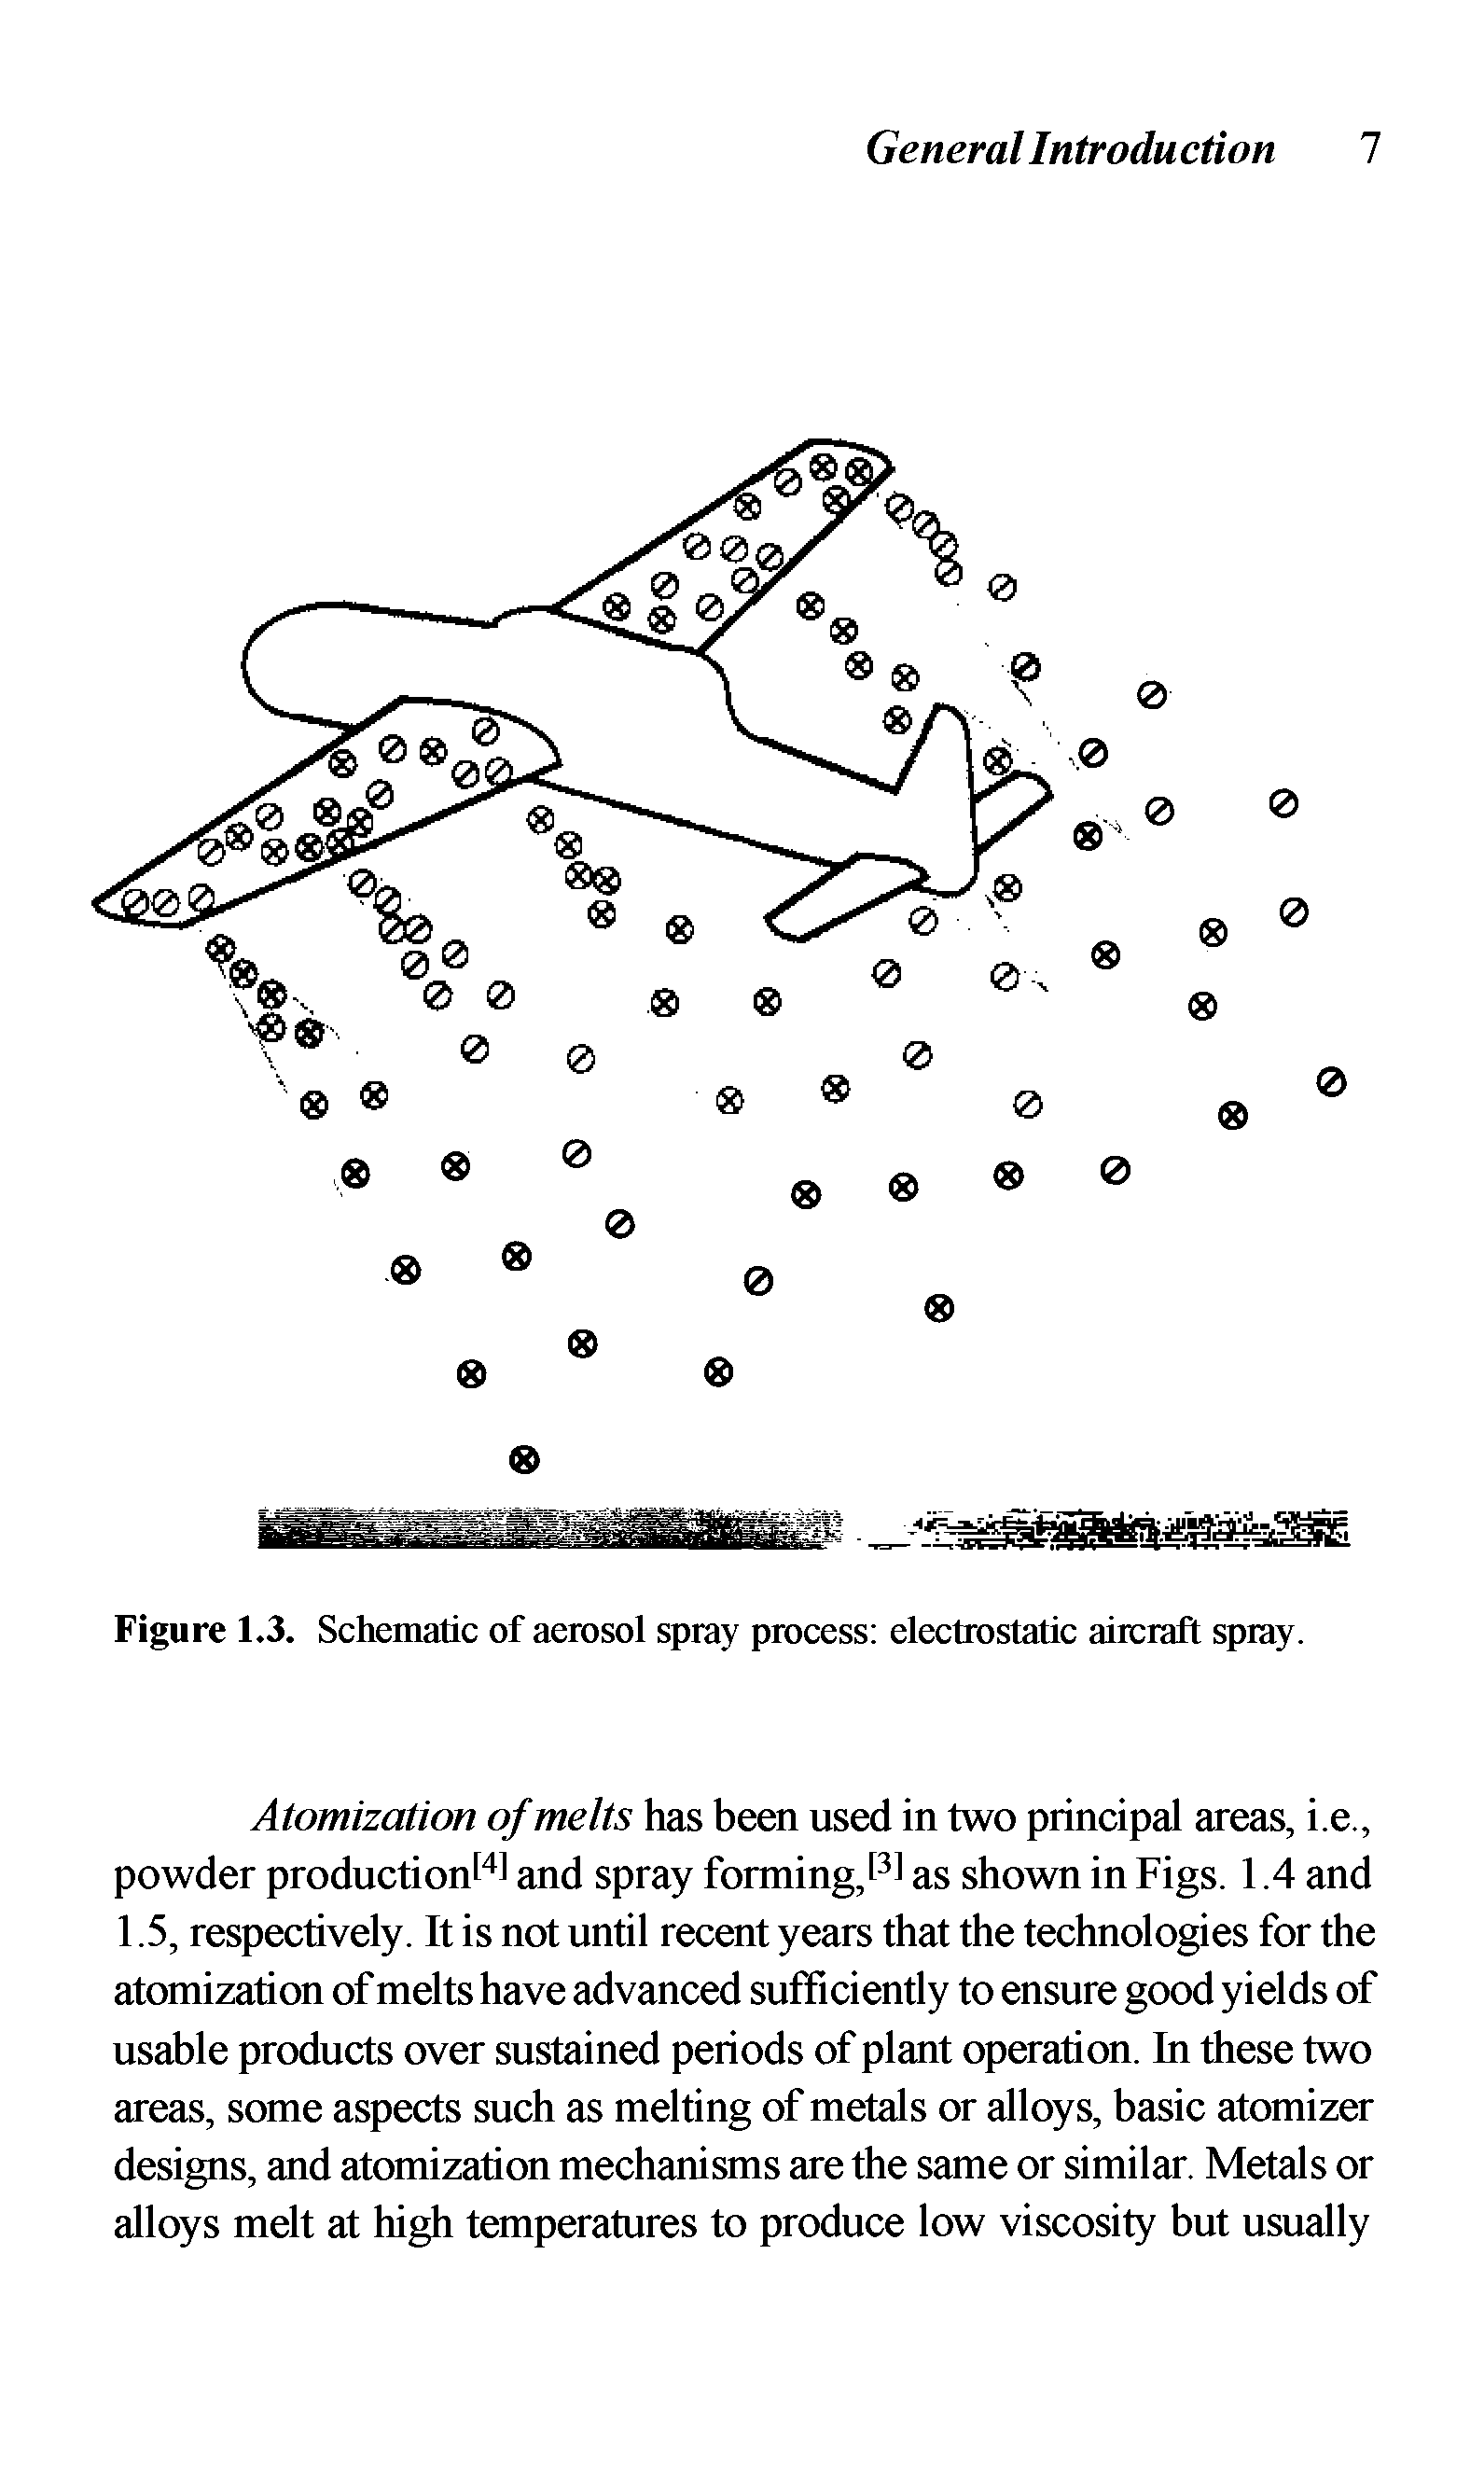 Figure 1.3. Schematic of aerosol spray process electrostatic aircraft spray.